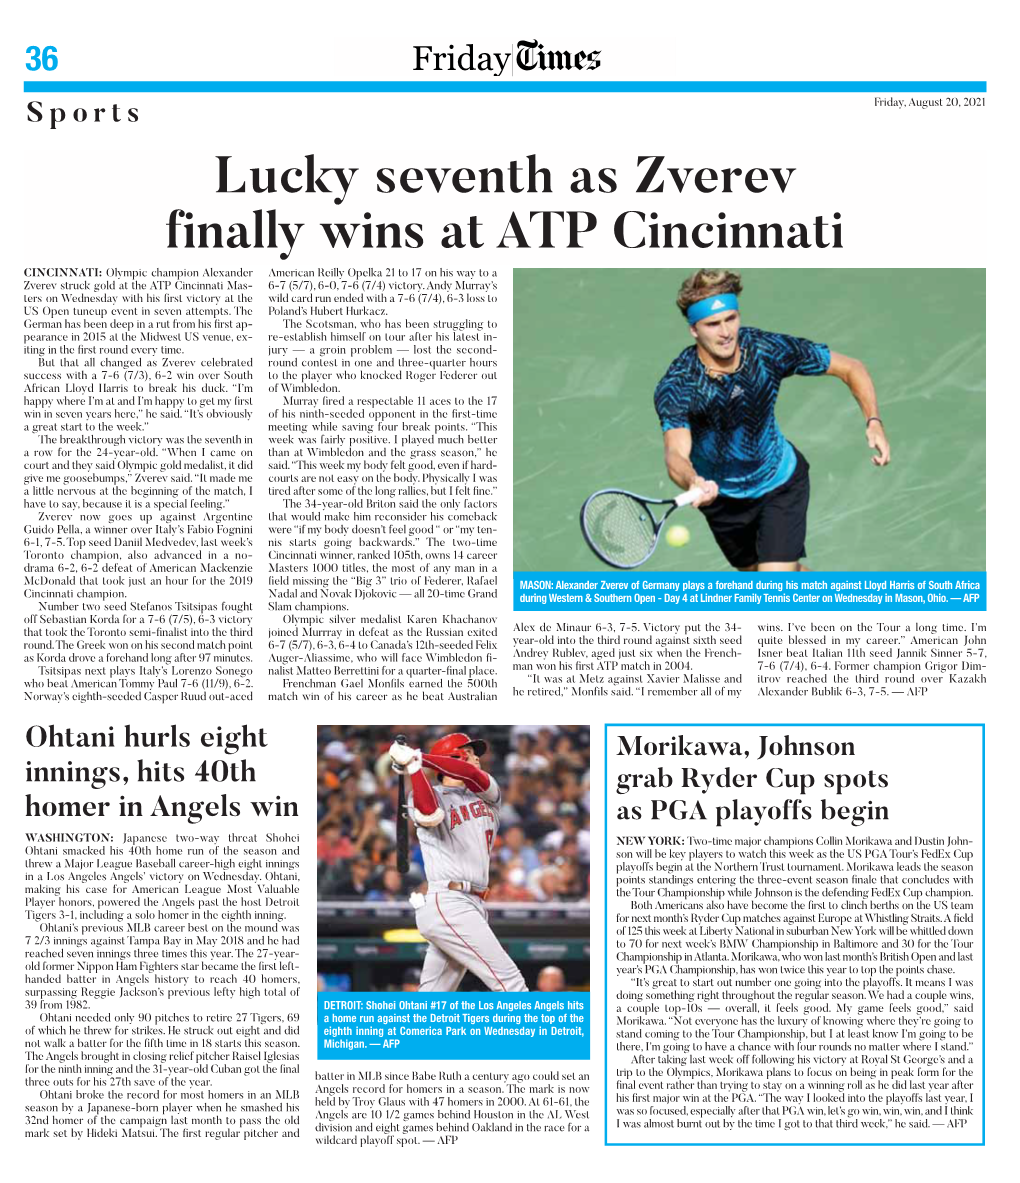 Lucky Seventh As Zverev Finally Wins at ATP Cincinnati